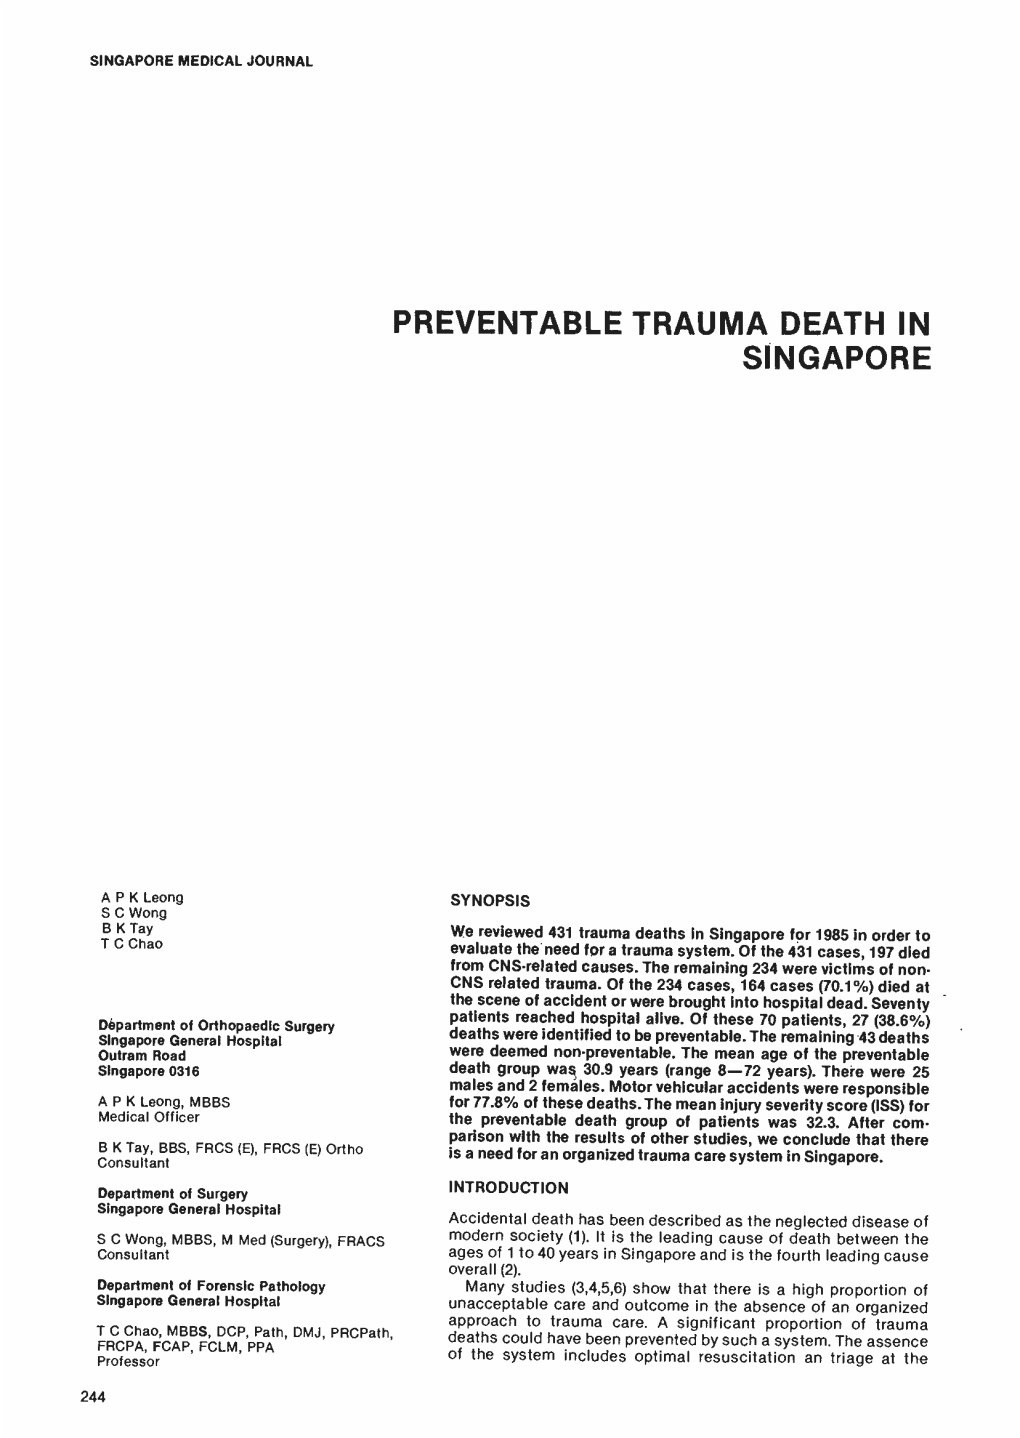 Preventable Trauma Death in Singapore